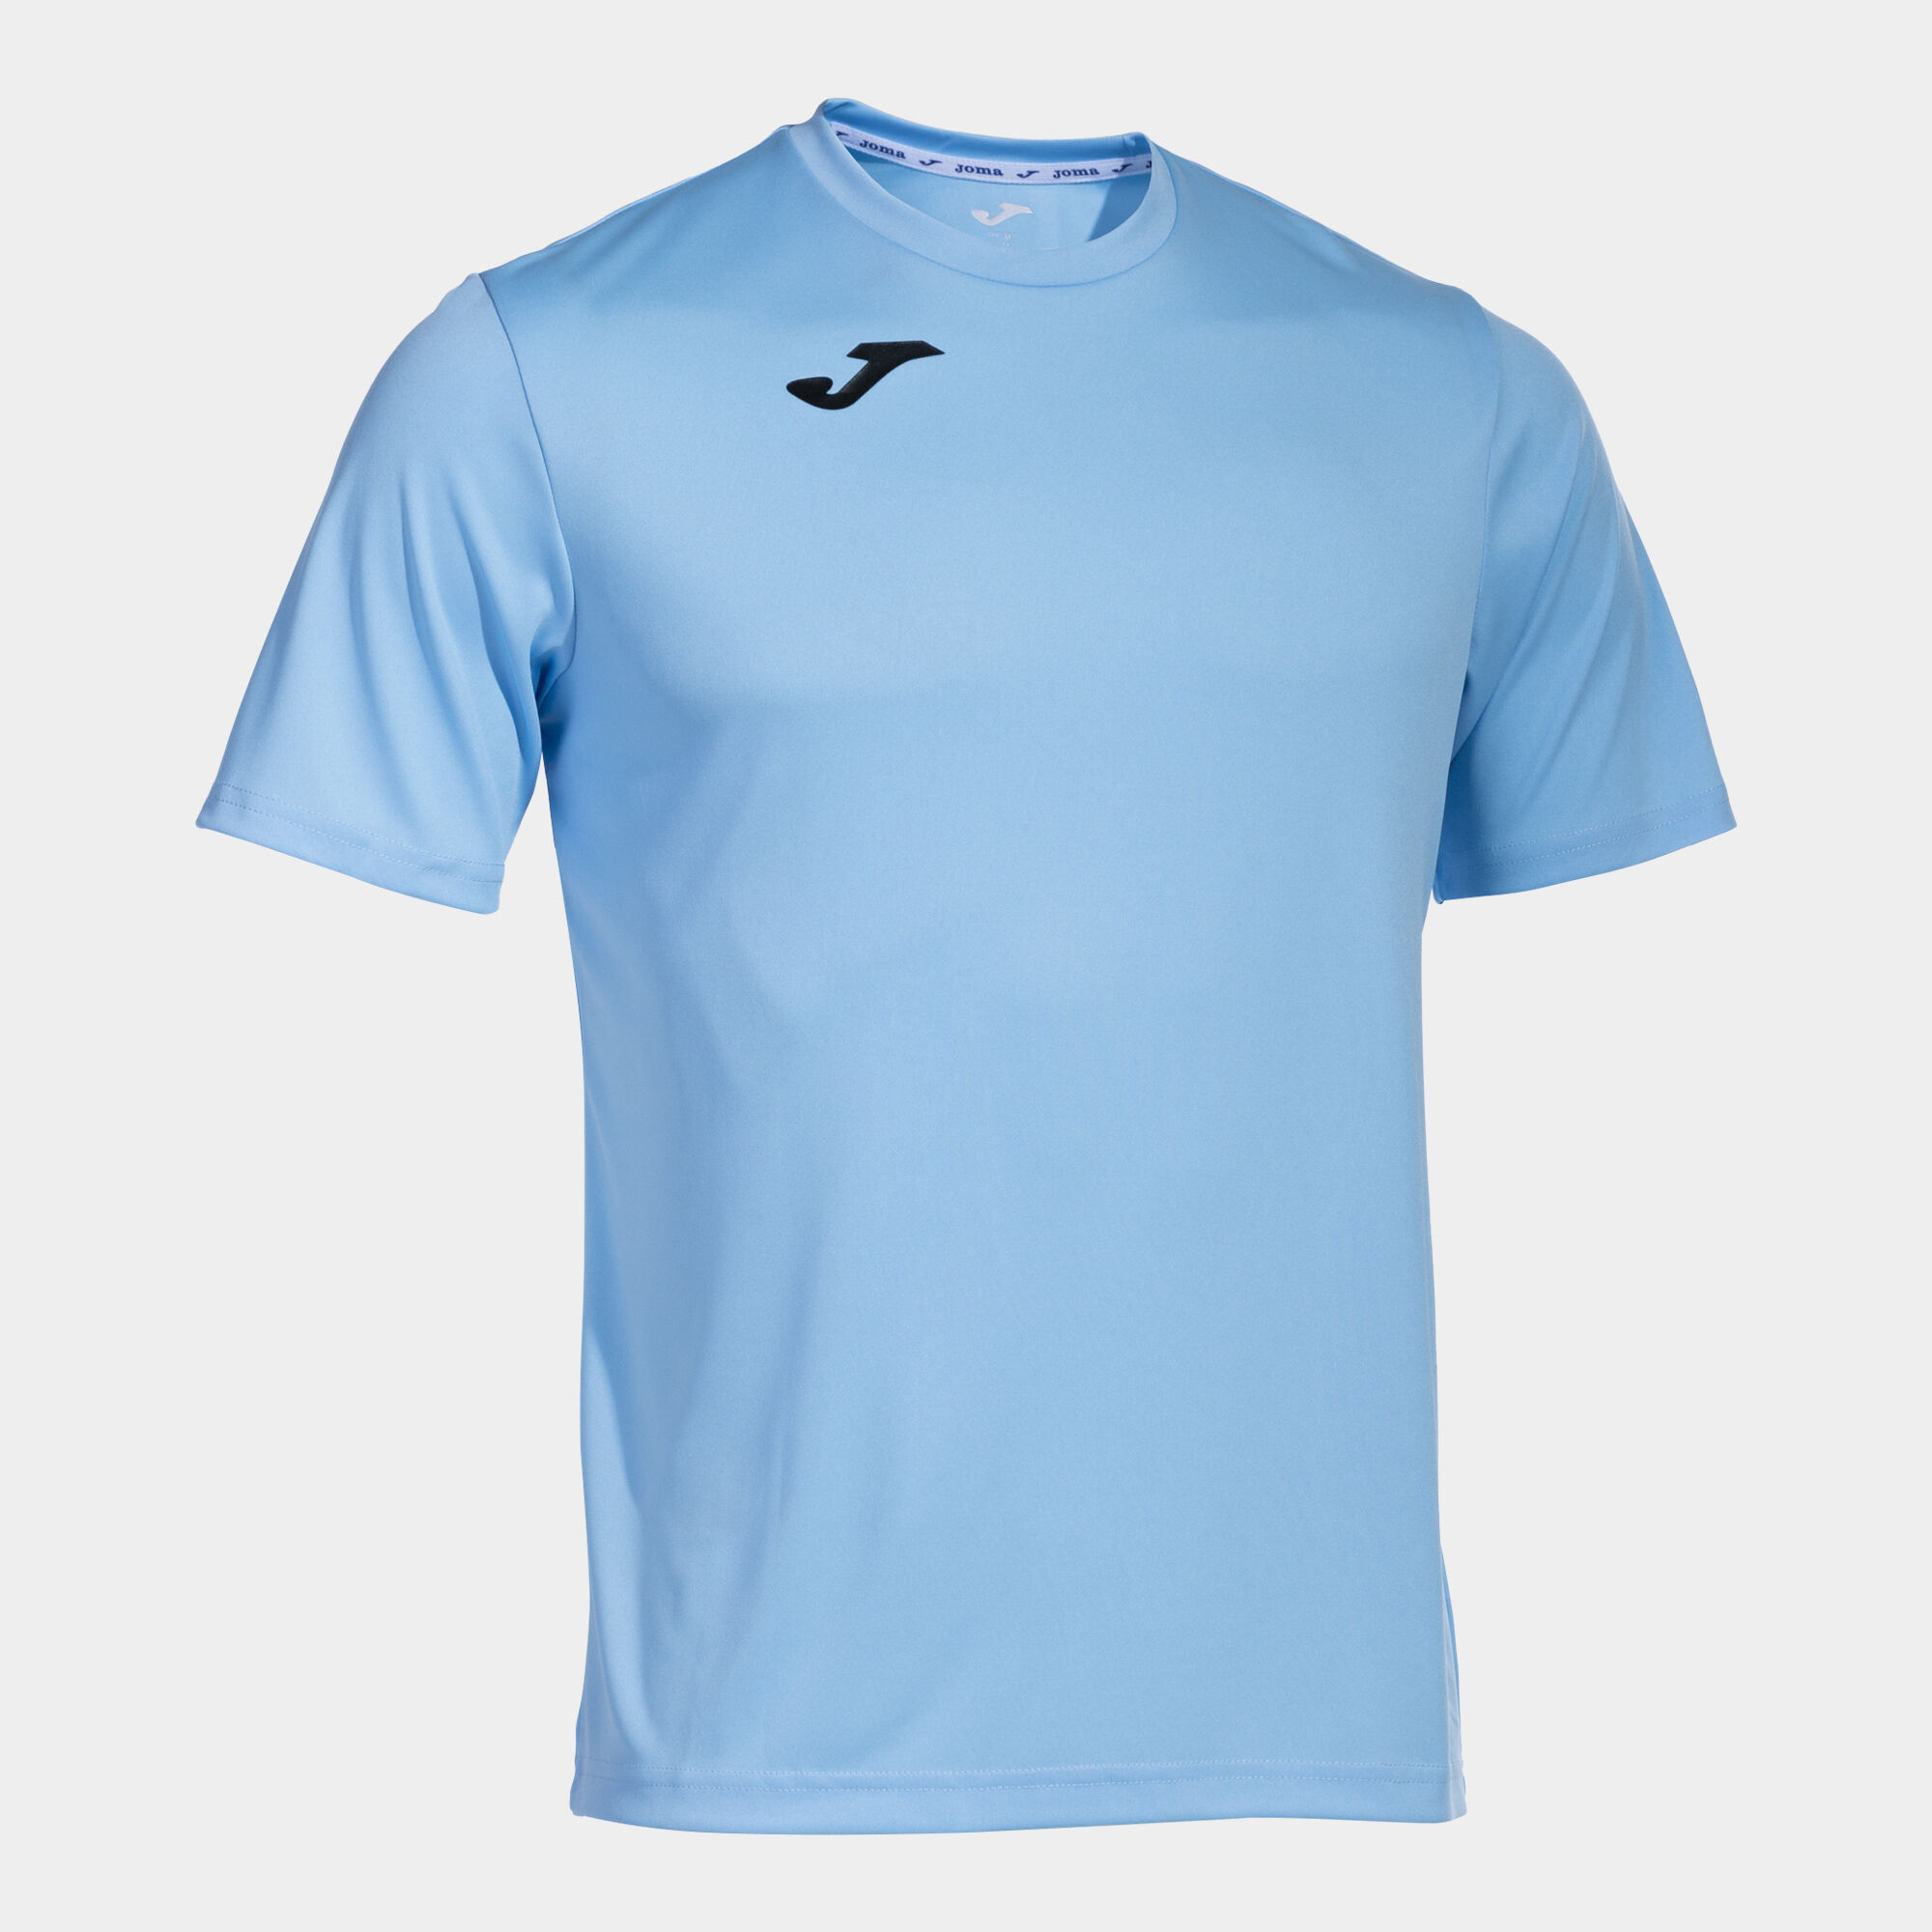 Joma Combi Camiseta de Tenis Mujer - Light Blue/Black